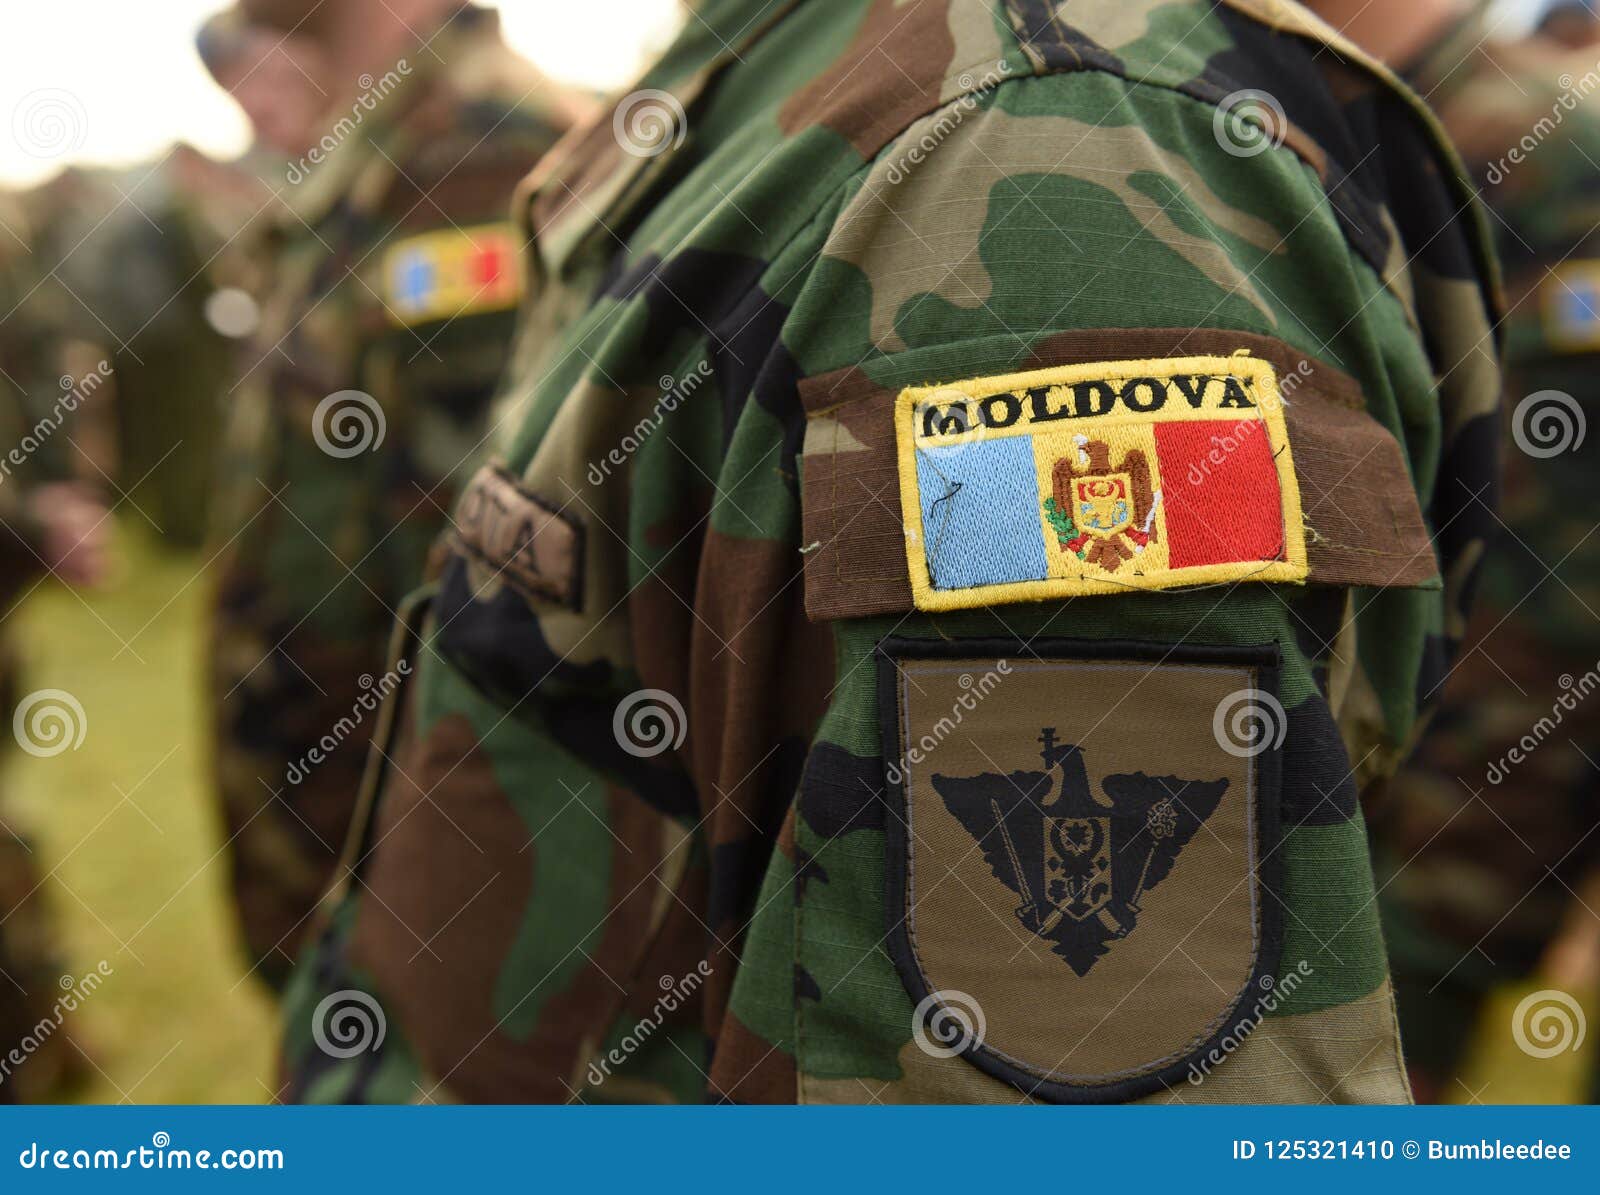 moldova army uniform patch flag. moldovan army